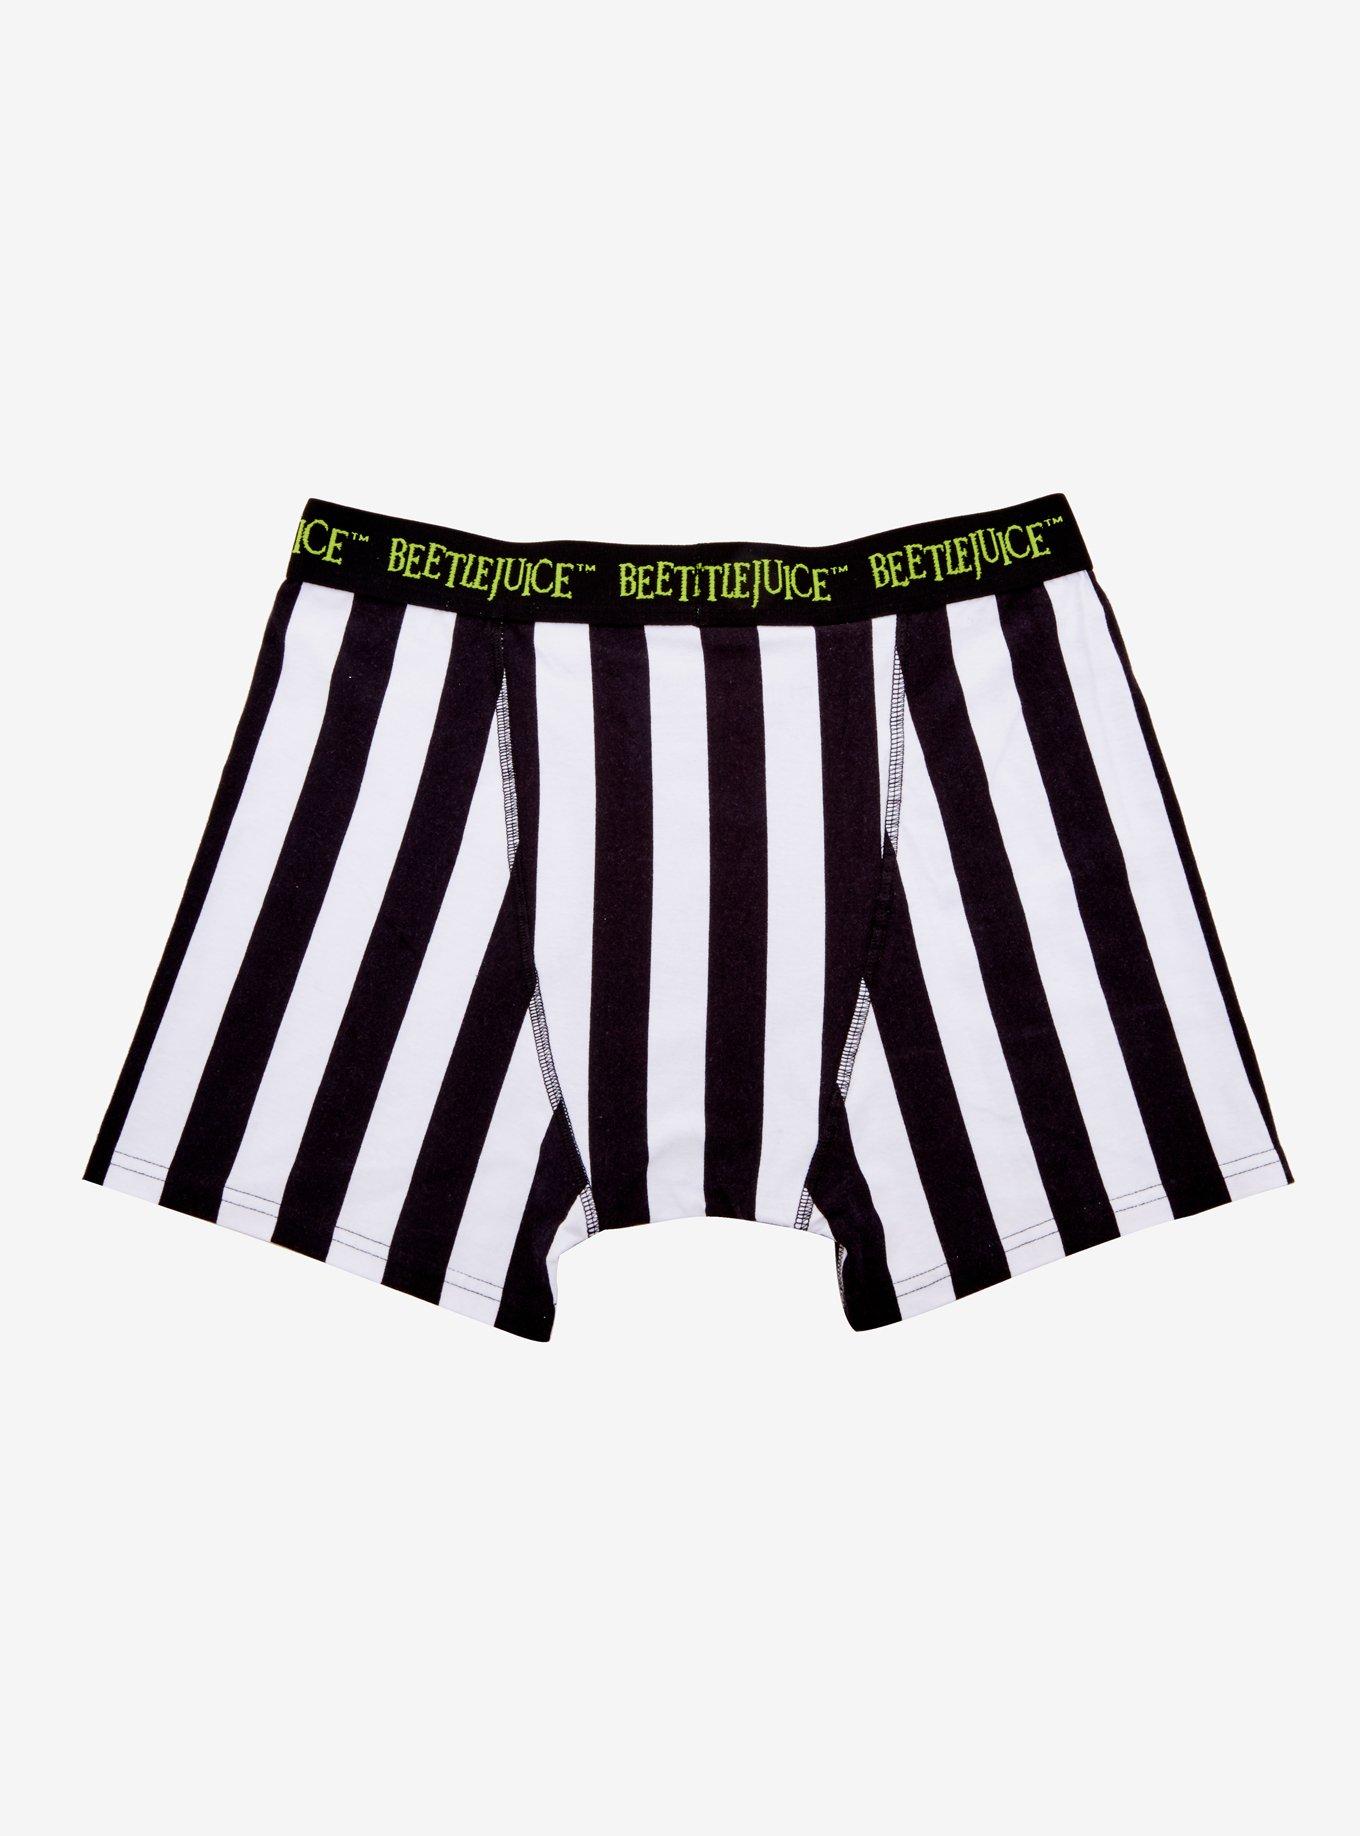 Beetlejuice Black & White Striped Boxer Briefs, , alternate